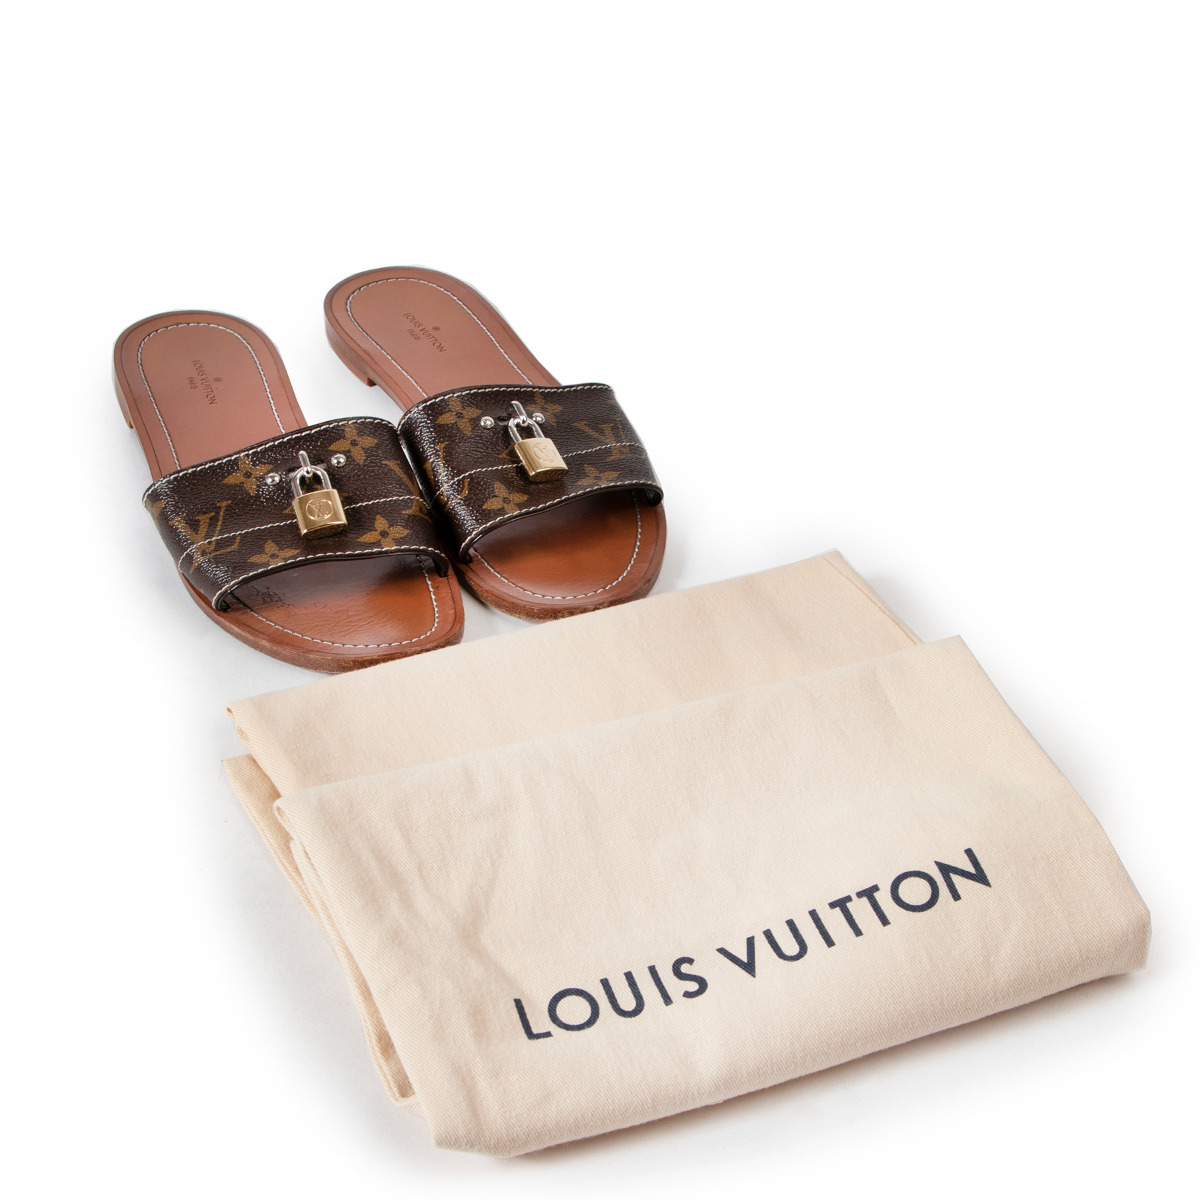 Louis Vuitton Sandals NIB sz 37